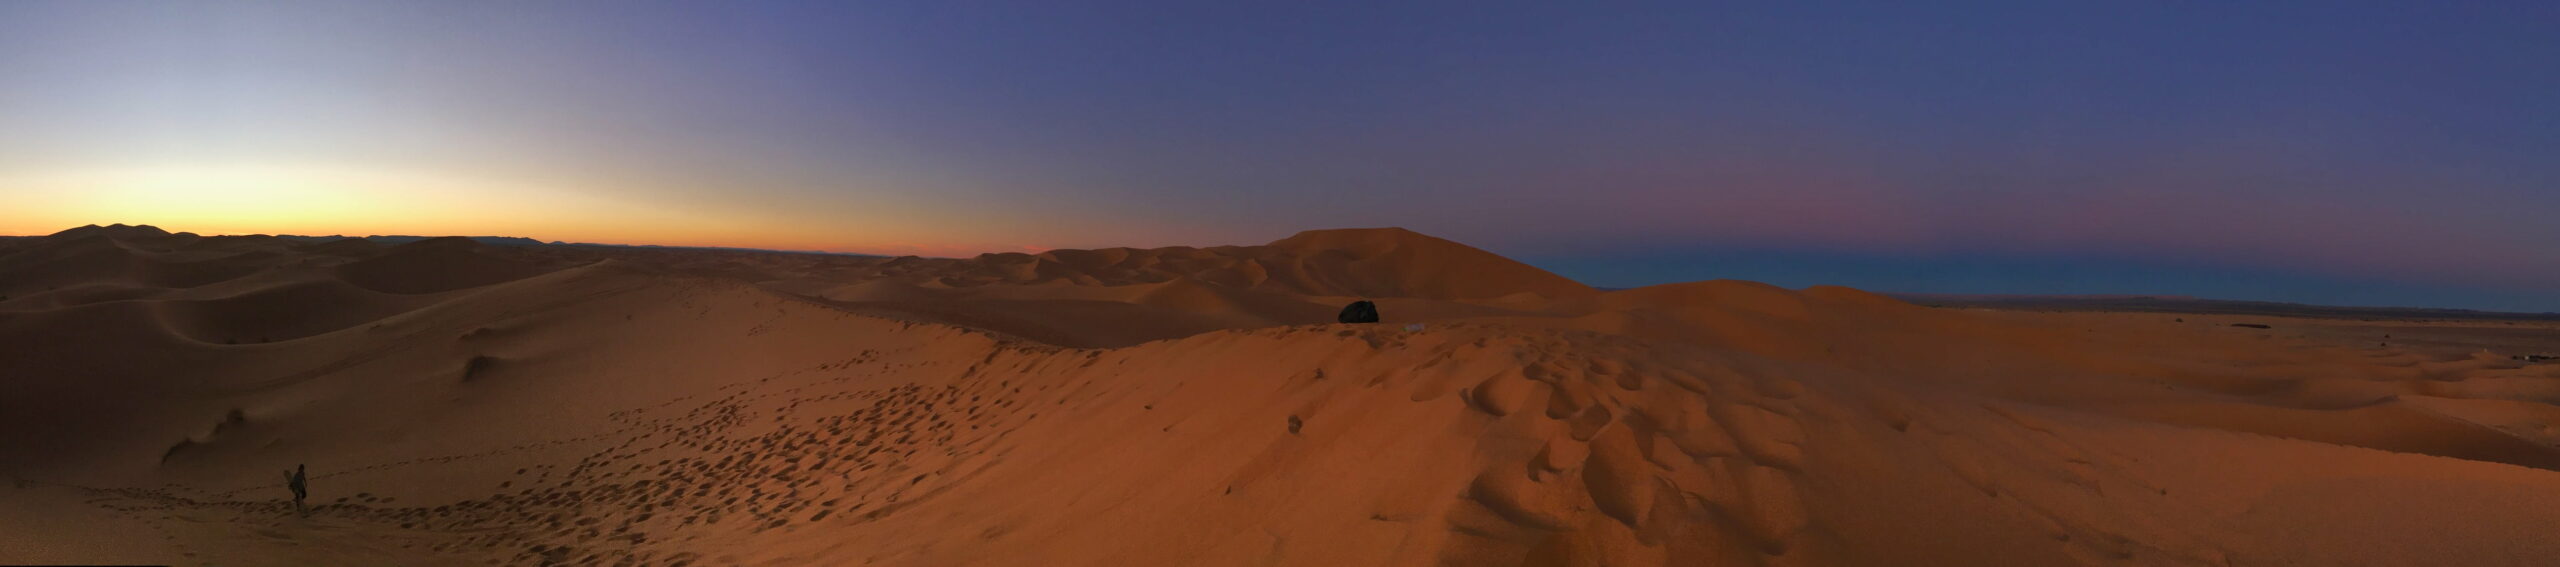 Sahara desert sunset panorama